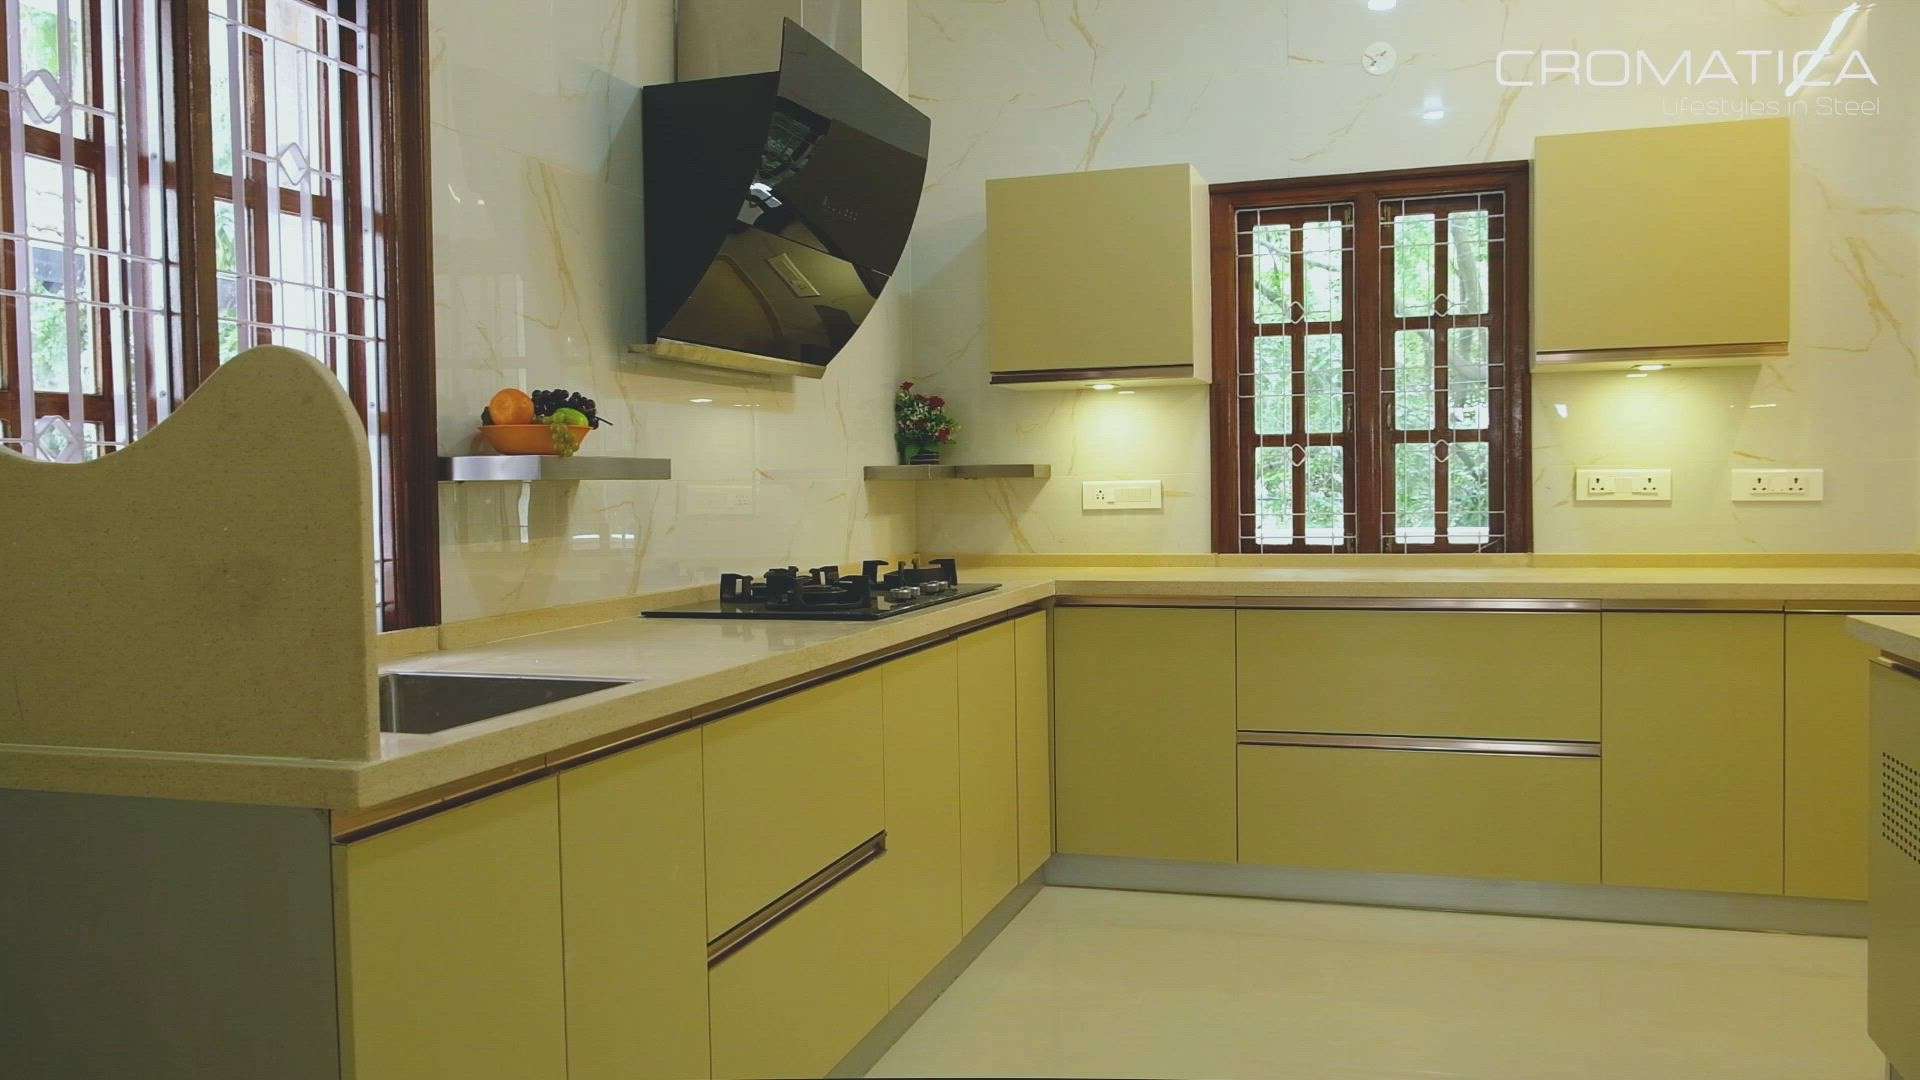 Cromatica Stainless Steel Modular Kitchens with lifetime warranty #modularkitchens 
#Interiors